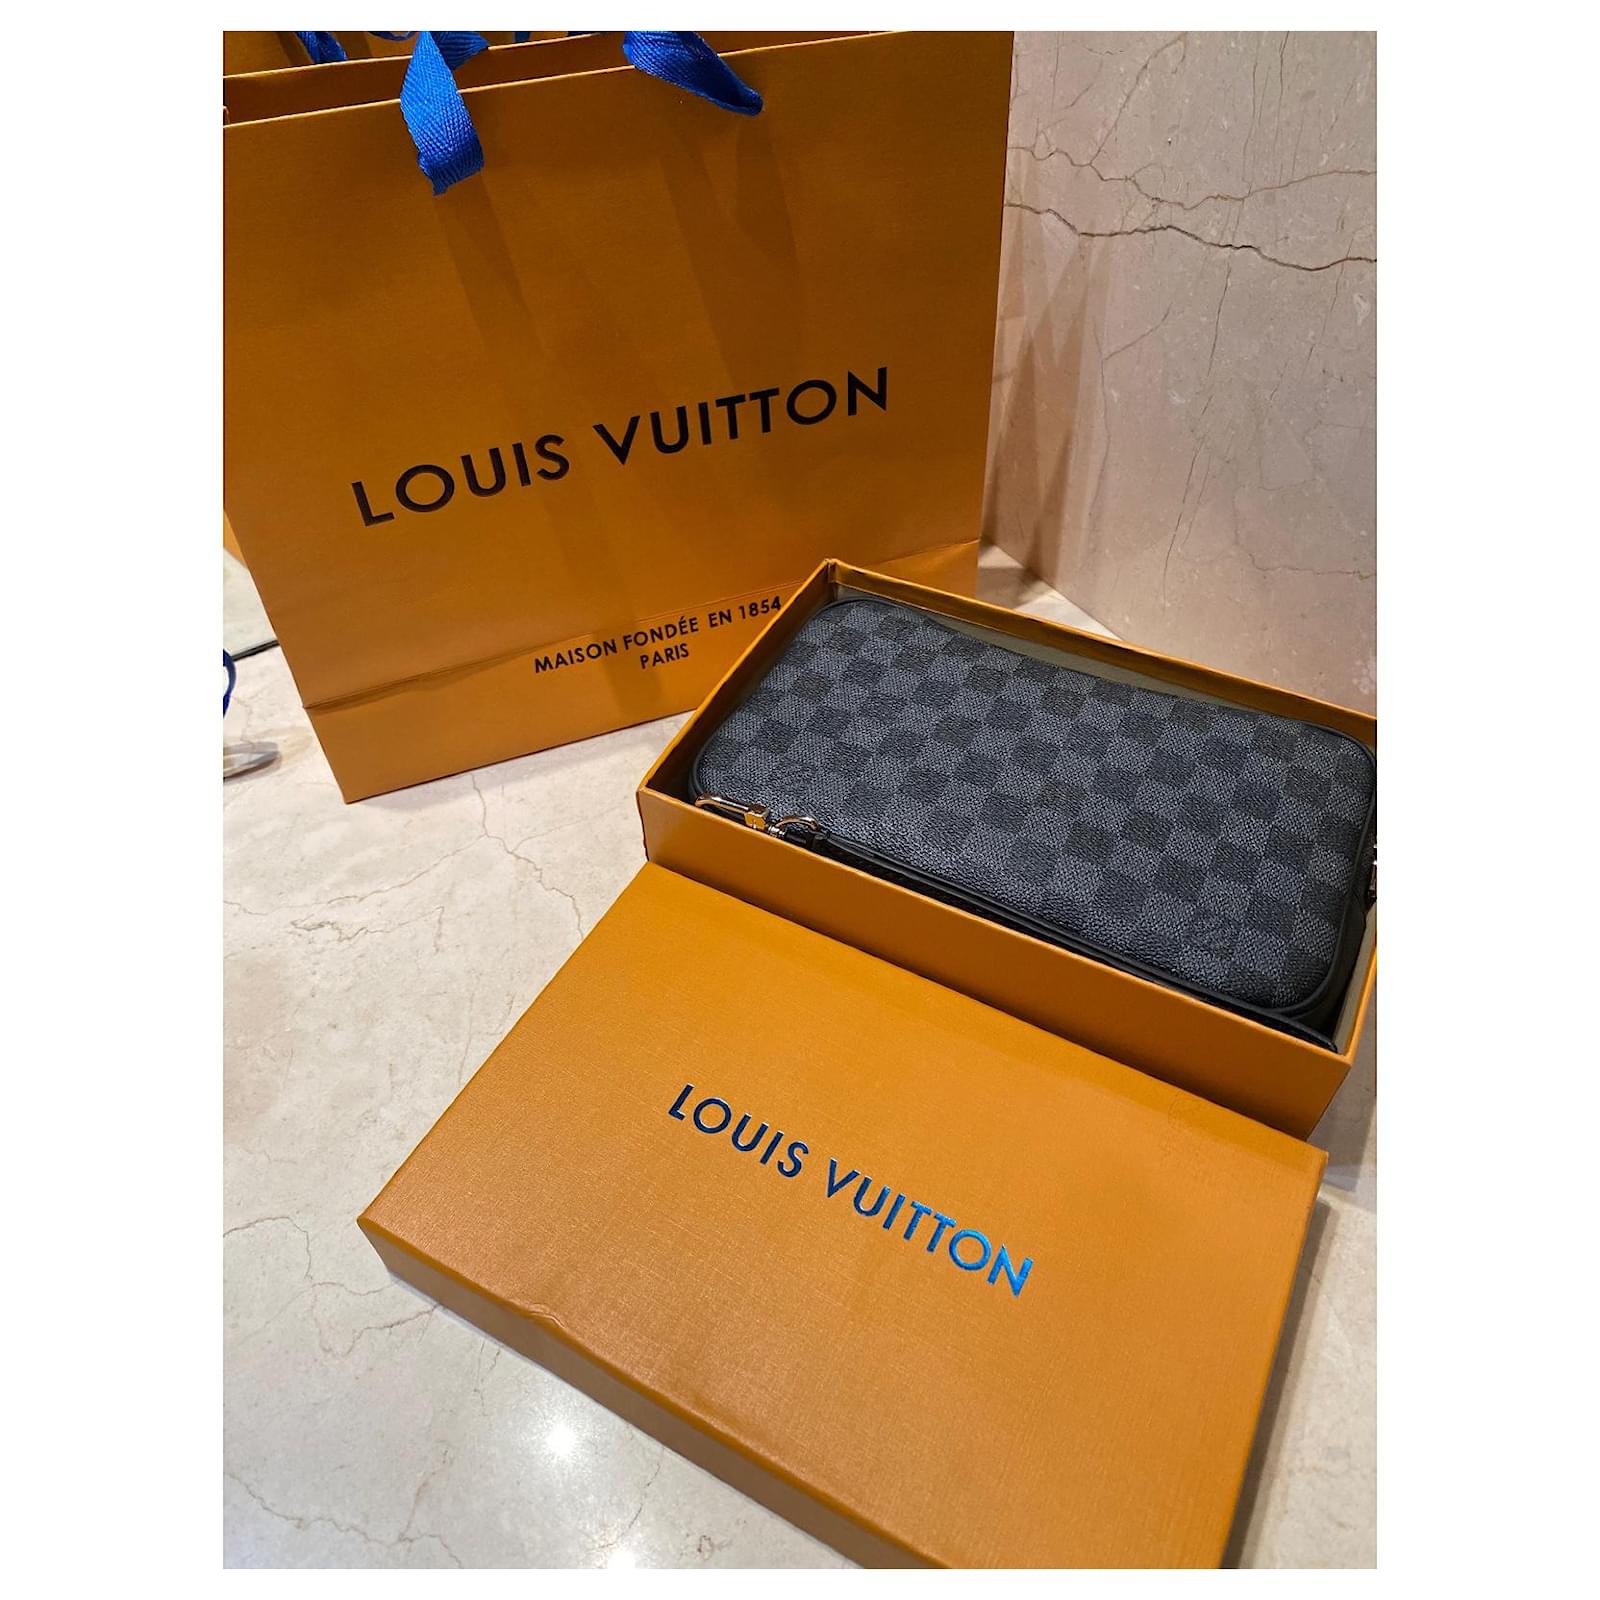 Louis Vuitton LV Kasai clutch in Damier Graphite Canvas Navy blue